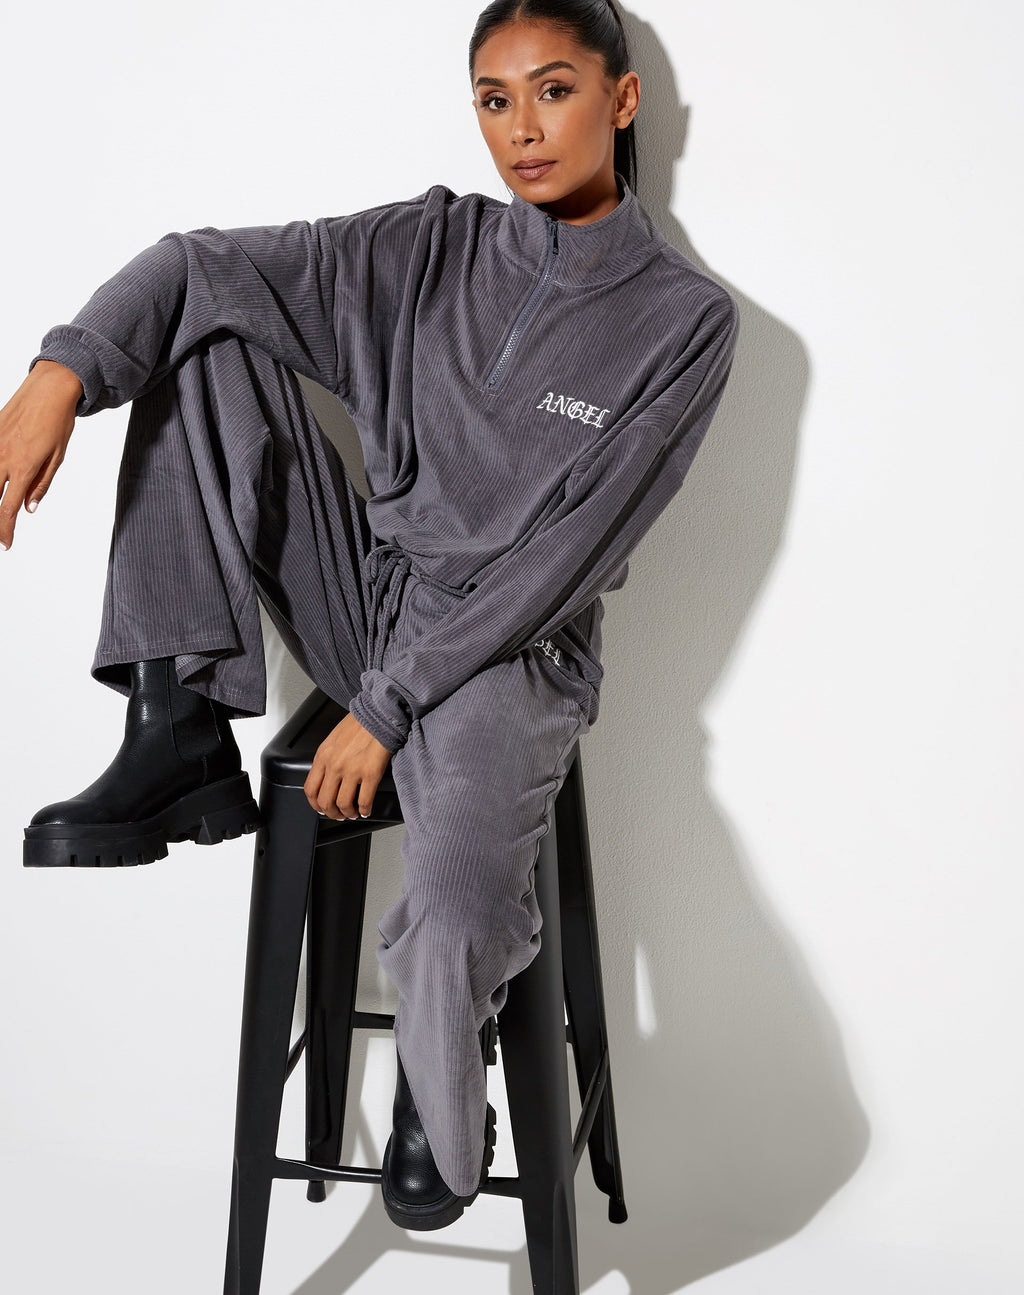 Olini Jumper in Charcoal Grey 'Angel' Embro